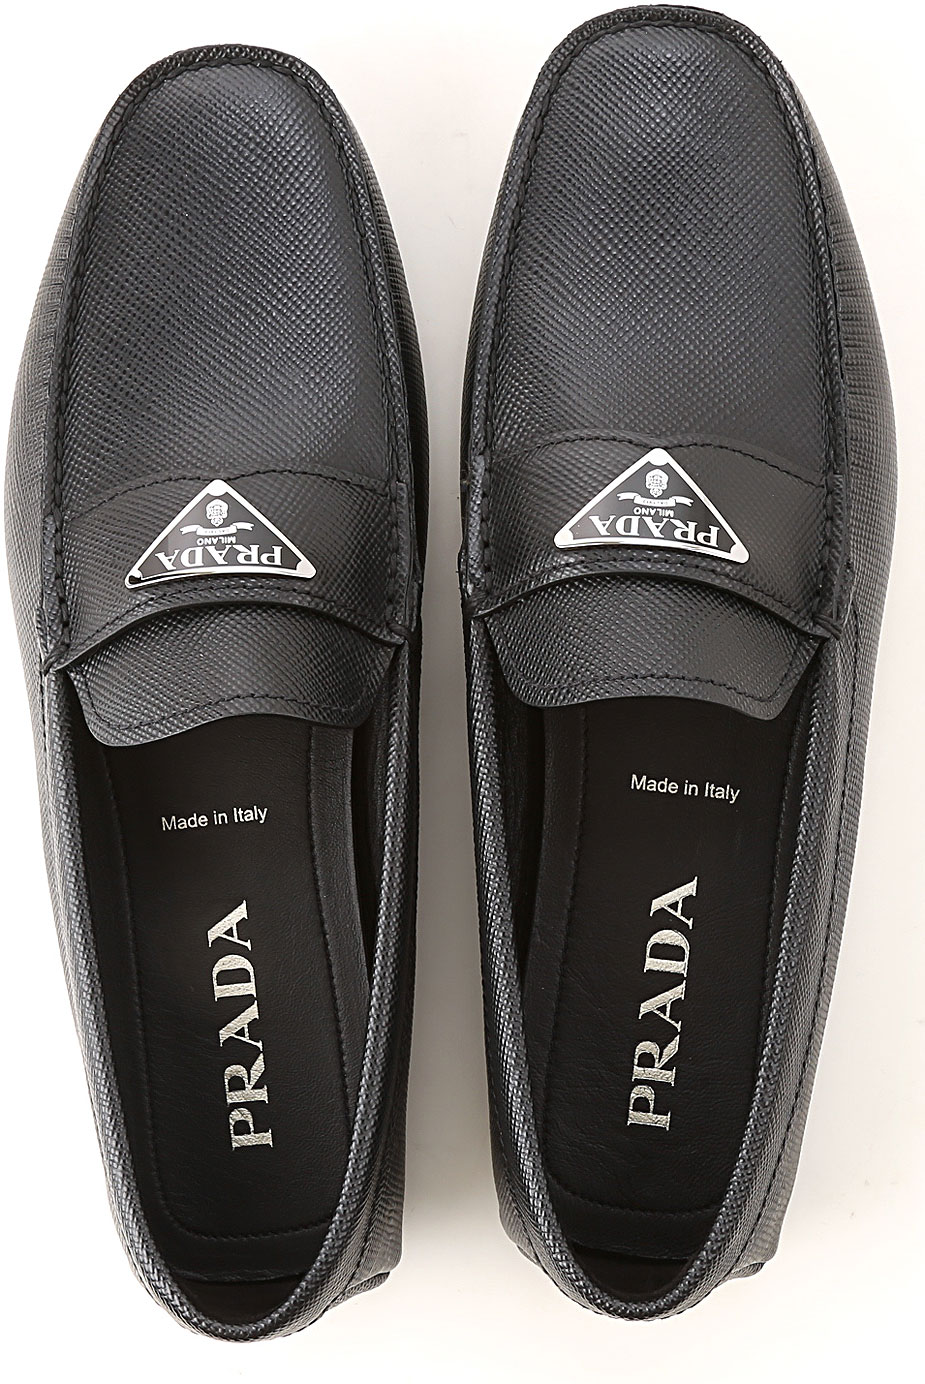 Mens Shoes Prada, Style code: 2dd164-3e0n-f0002